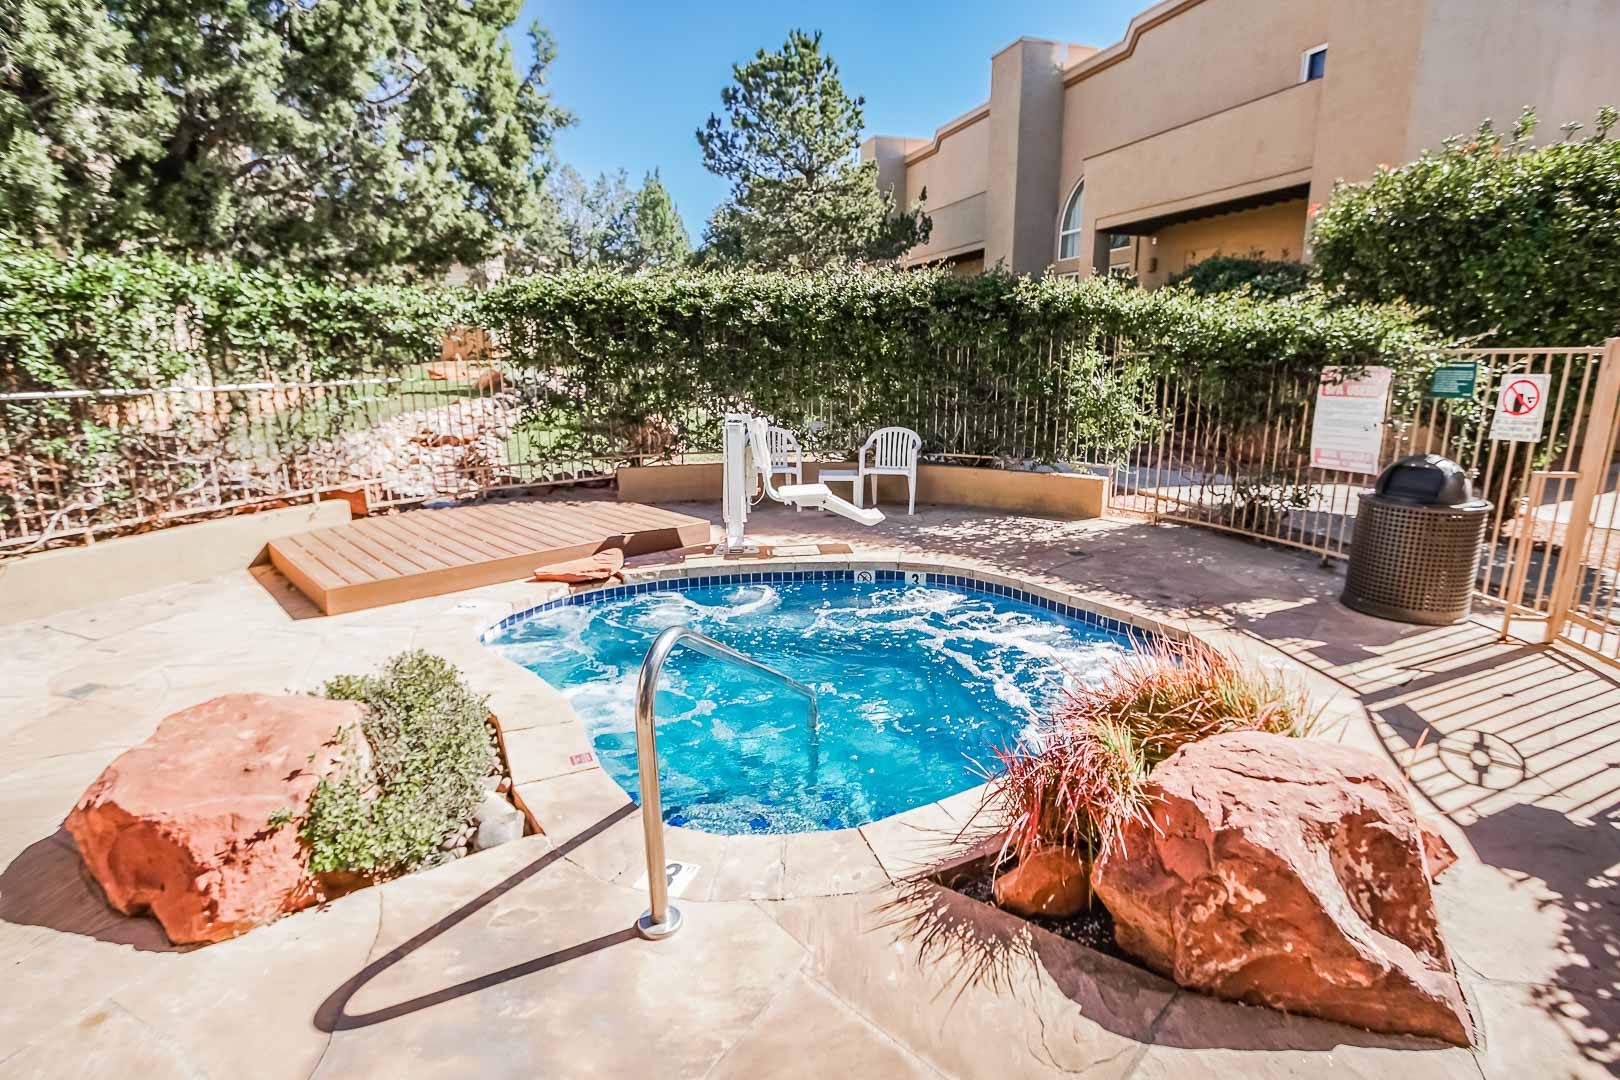 A beautiful outdoor swimming pool at VRI's Sedona Springs Resort in Sedona, Arizona.